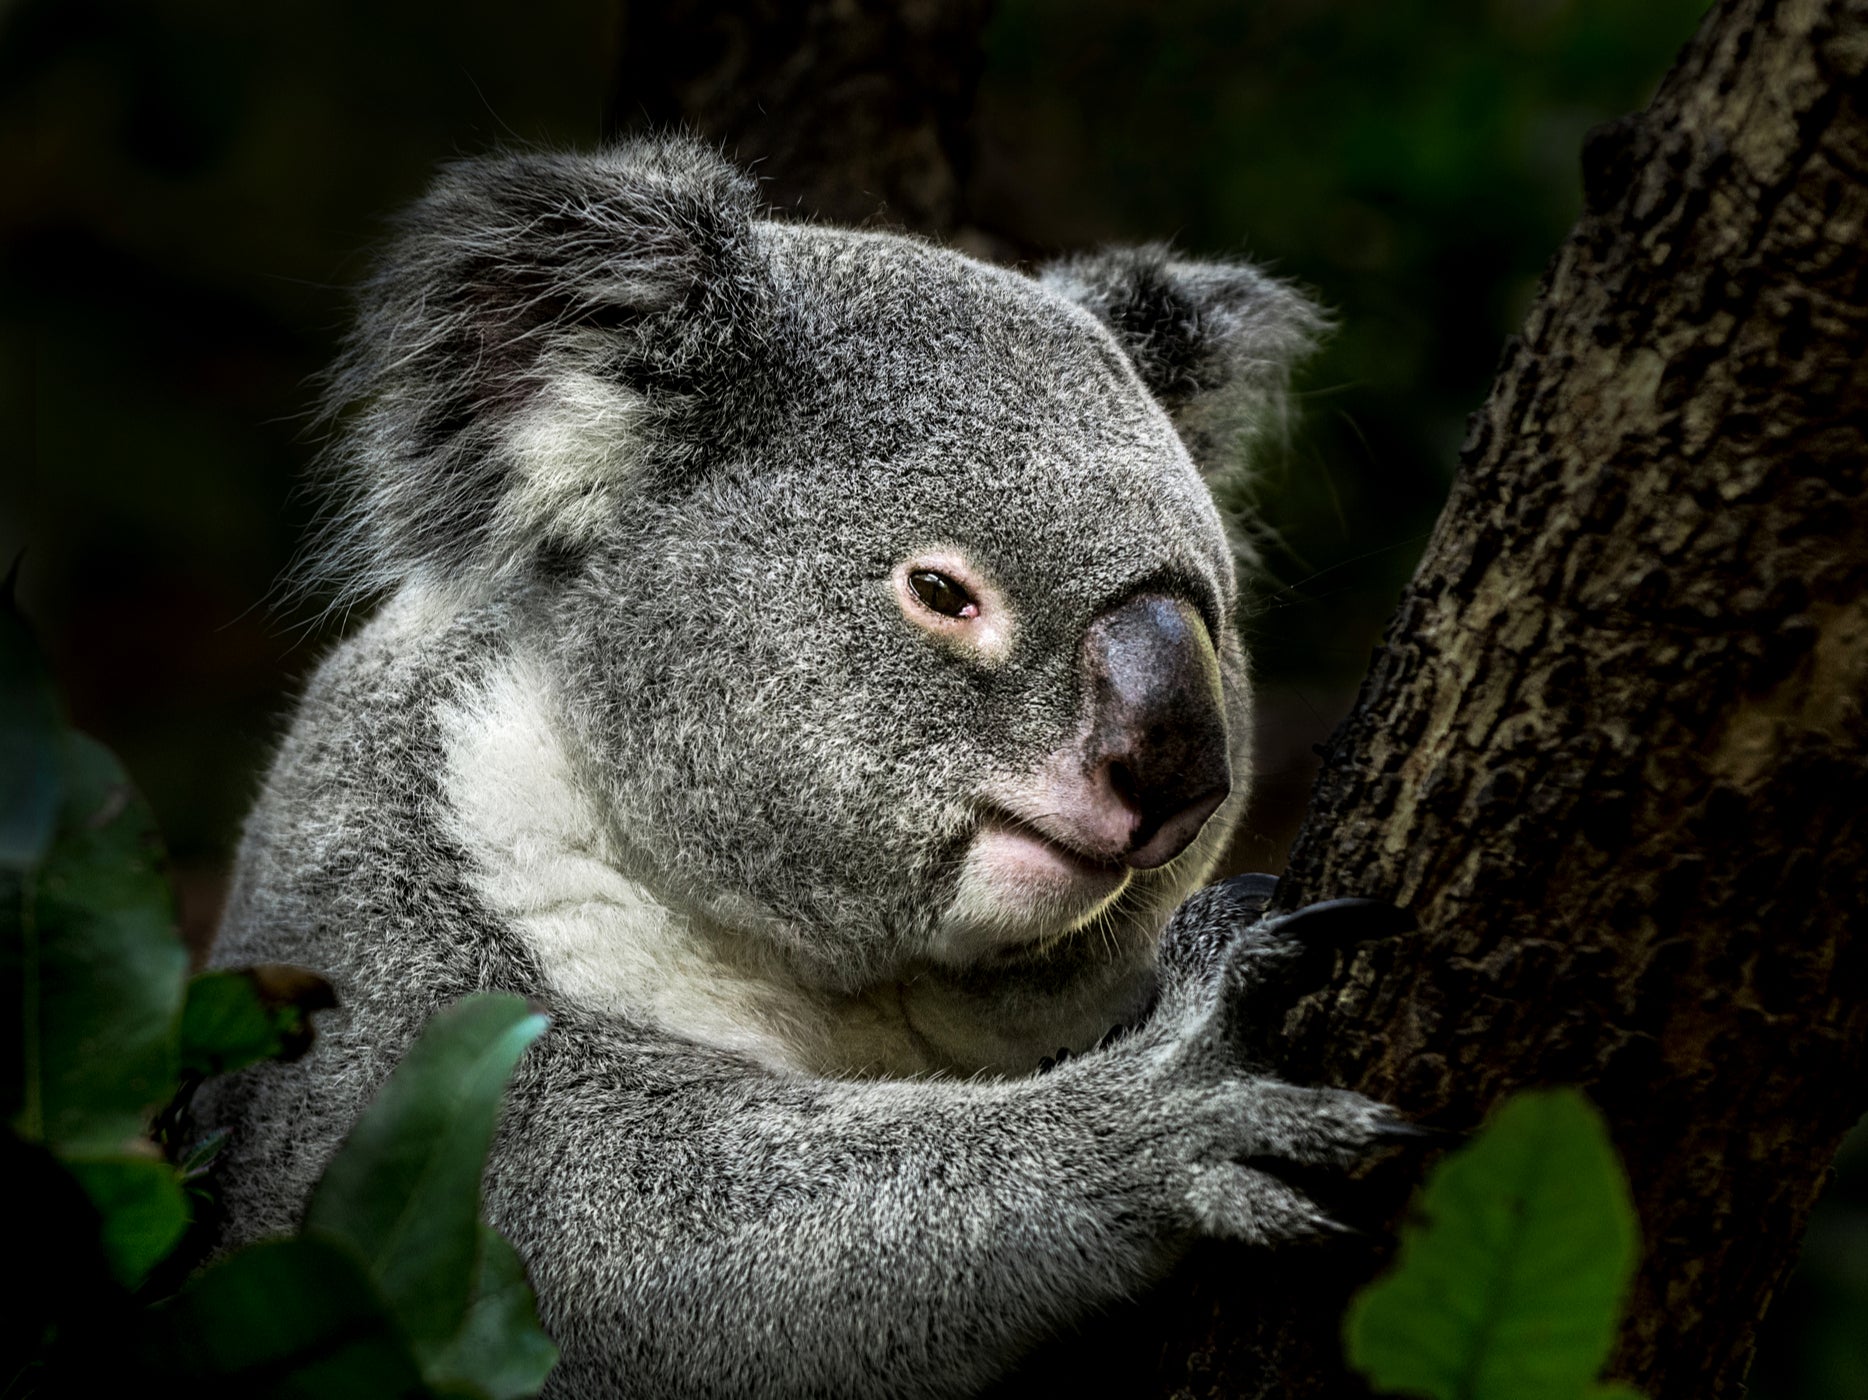 A koala in a eucalyptus tree - a more usual hangout